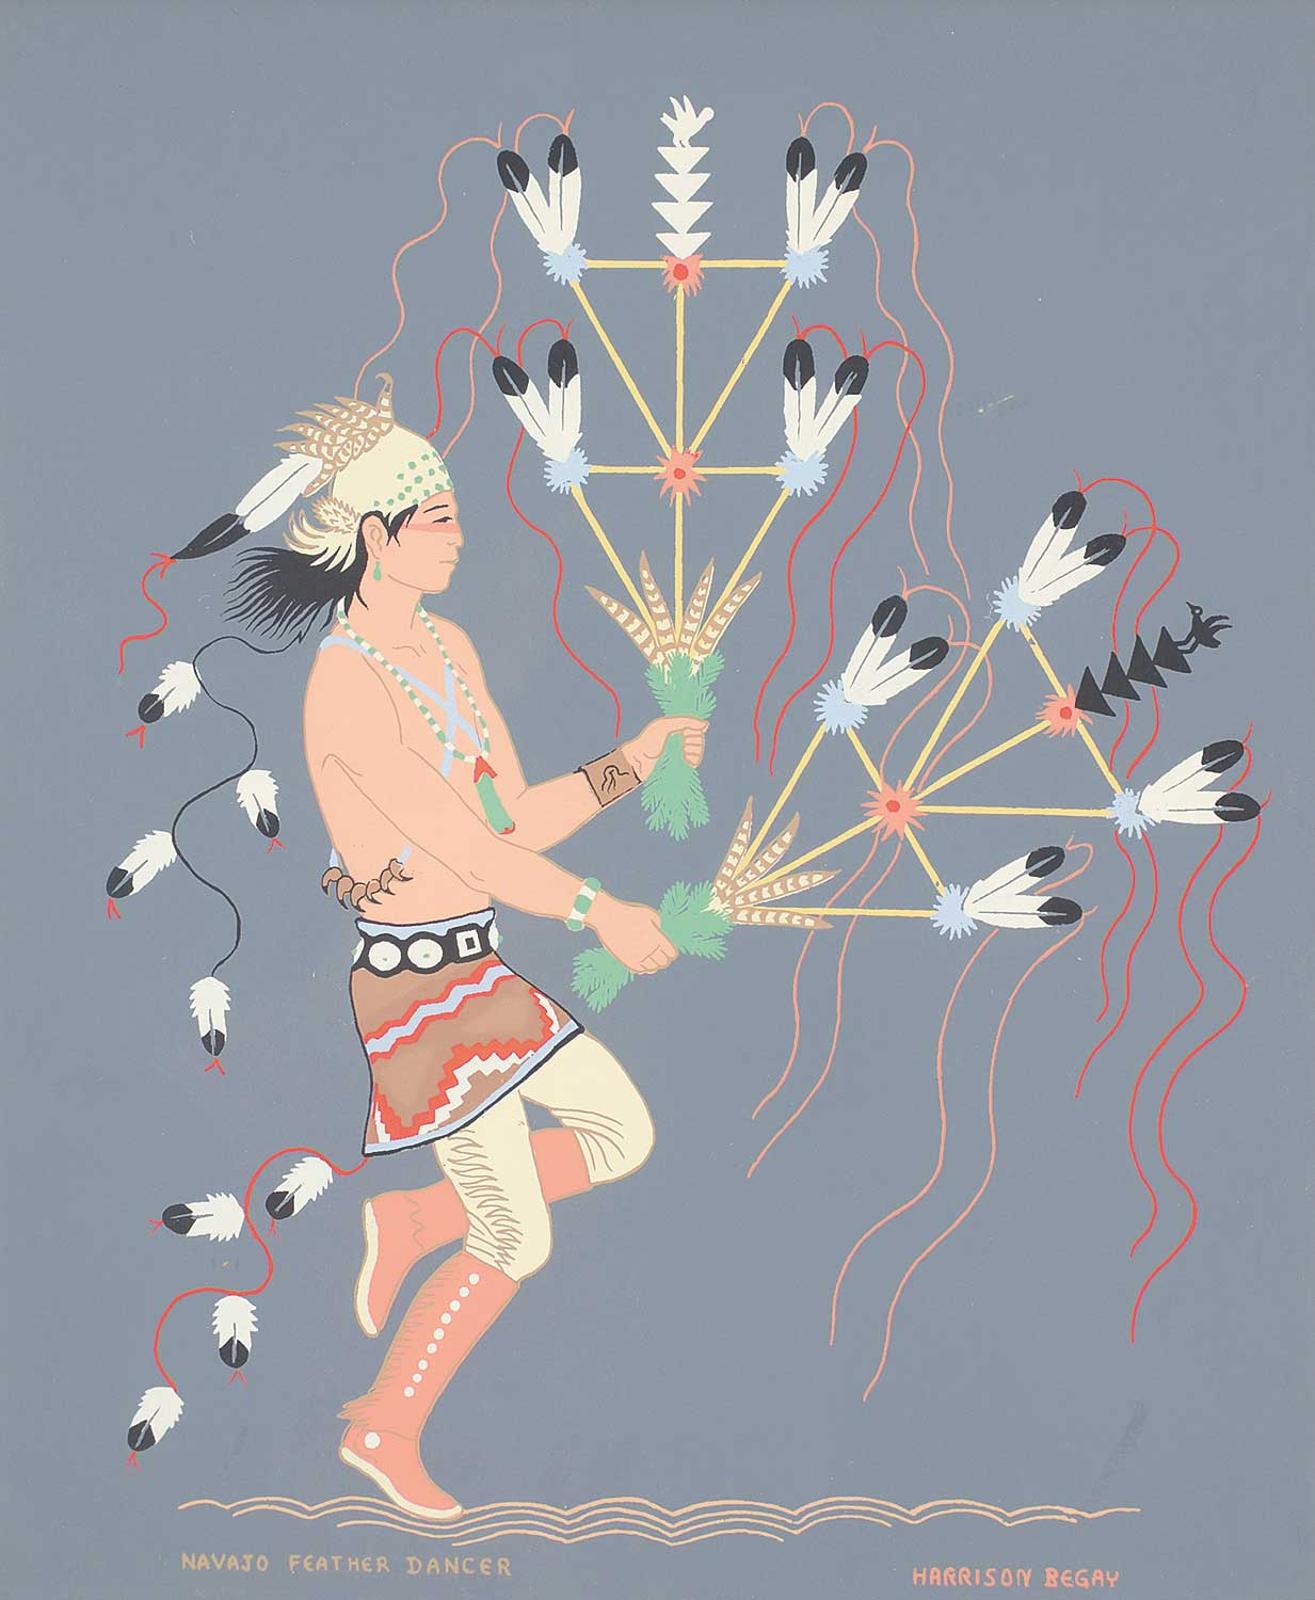 Harrison Begay - Navajo Feather Dancer [Male]